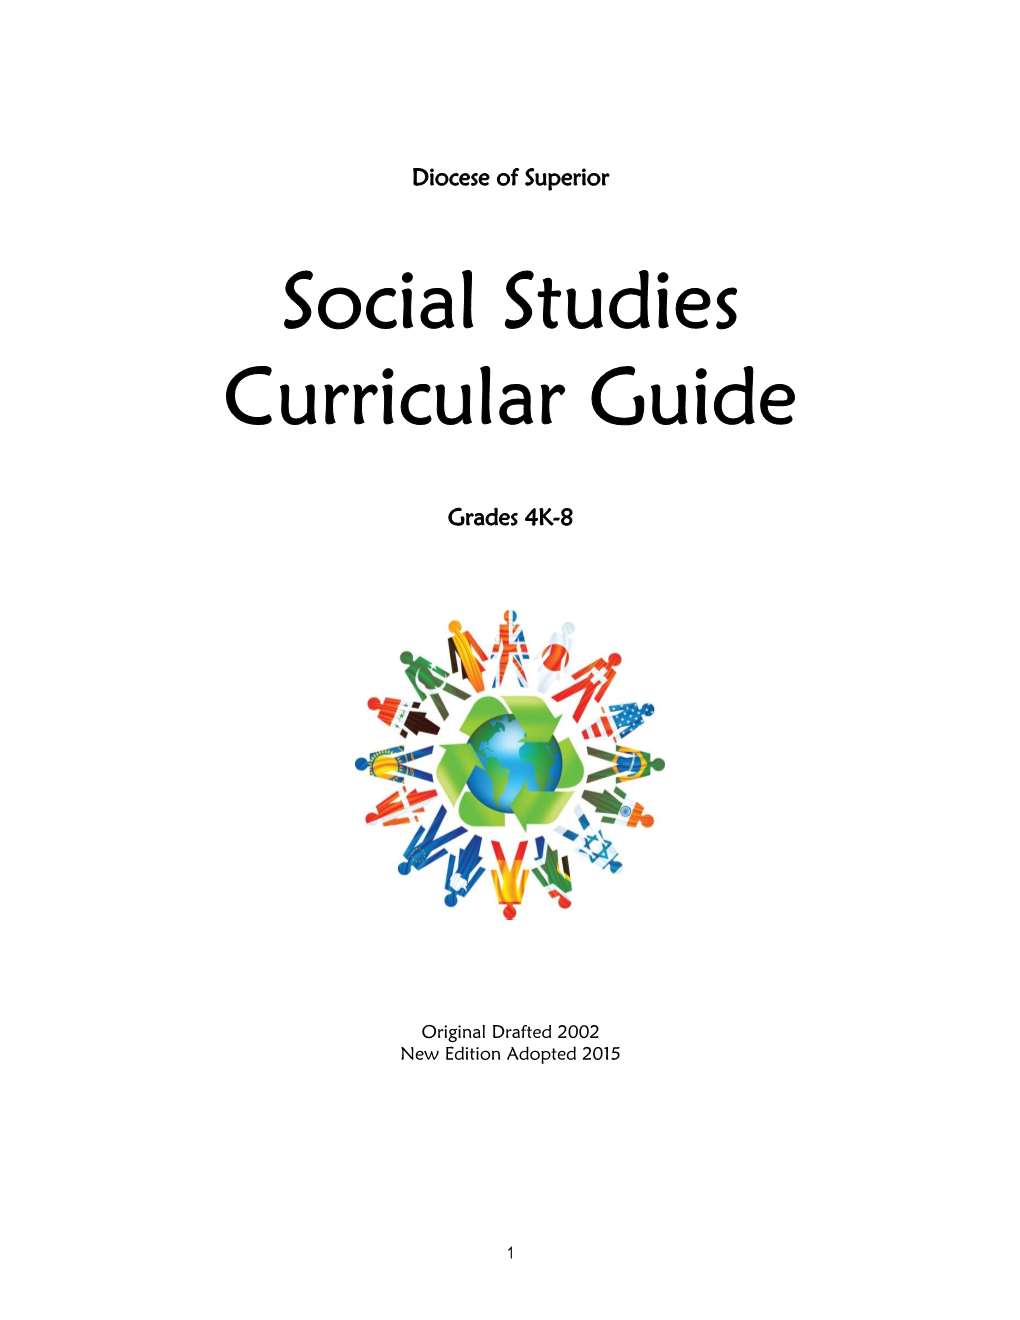 Social Studies Curricular Guide